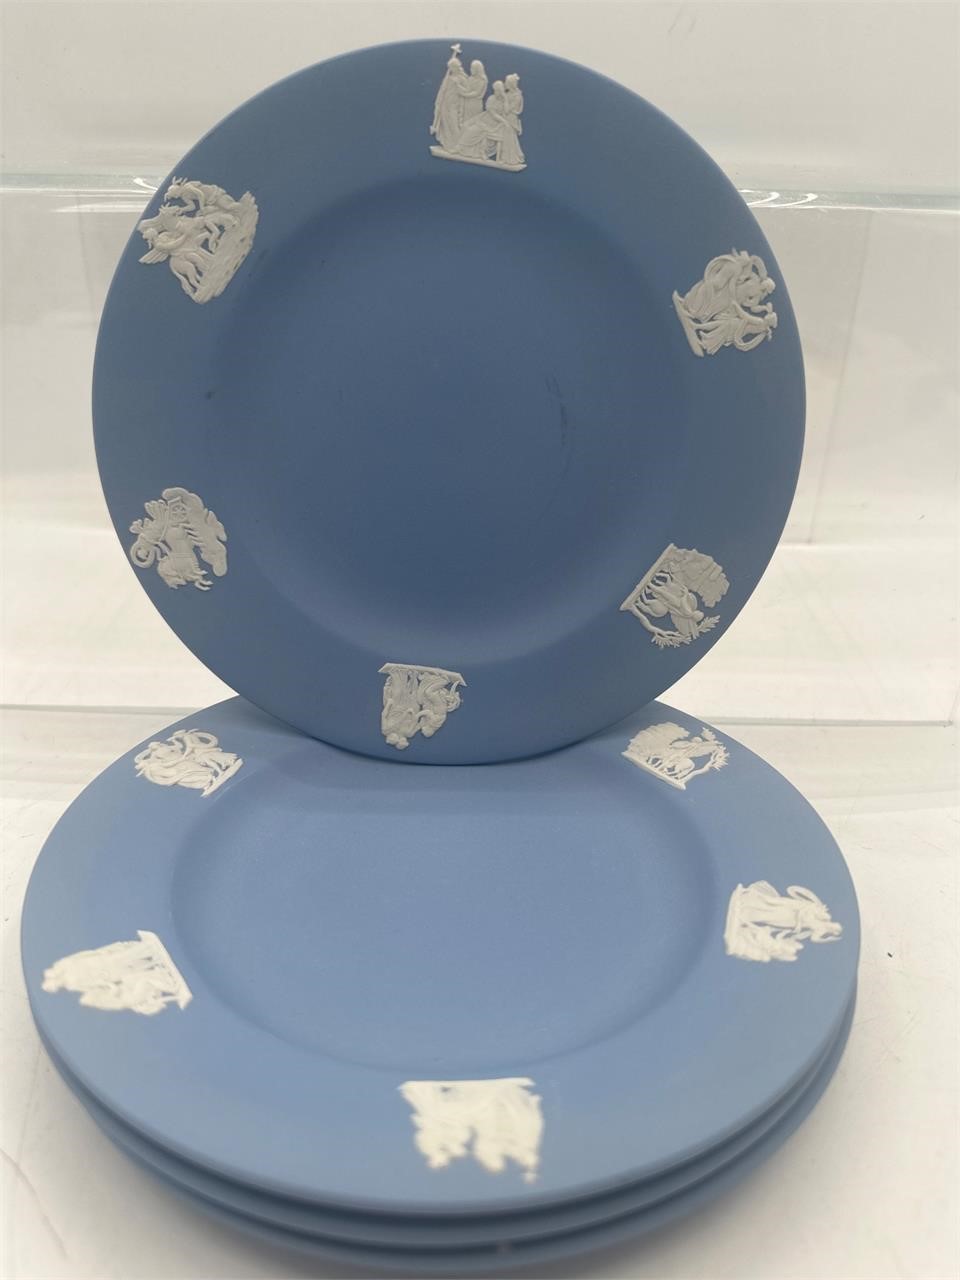 6 3/4" Wedgwood blue jasperware plates